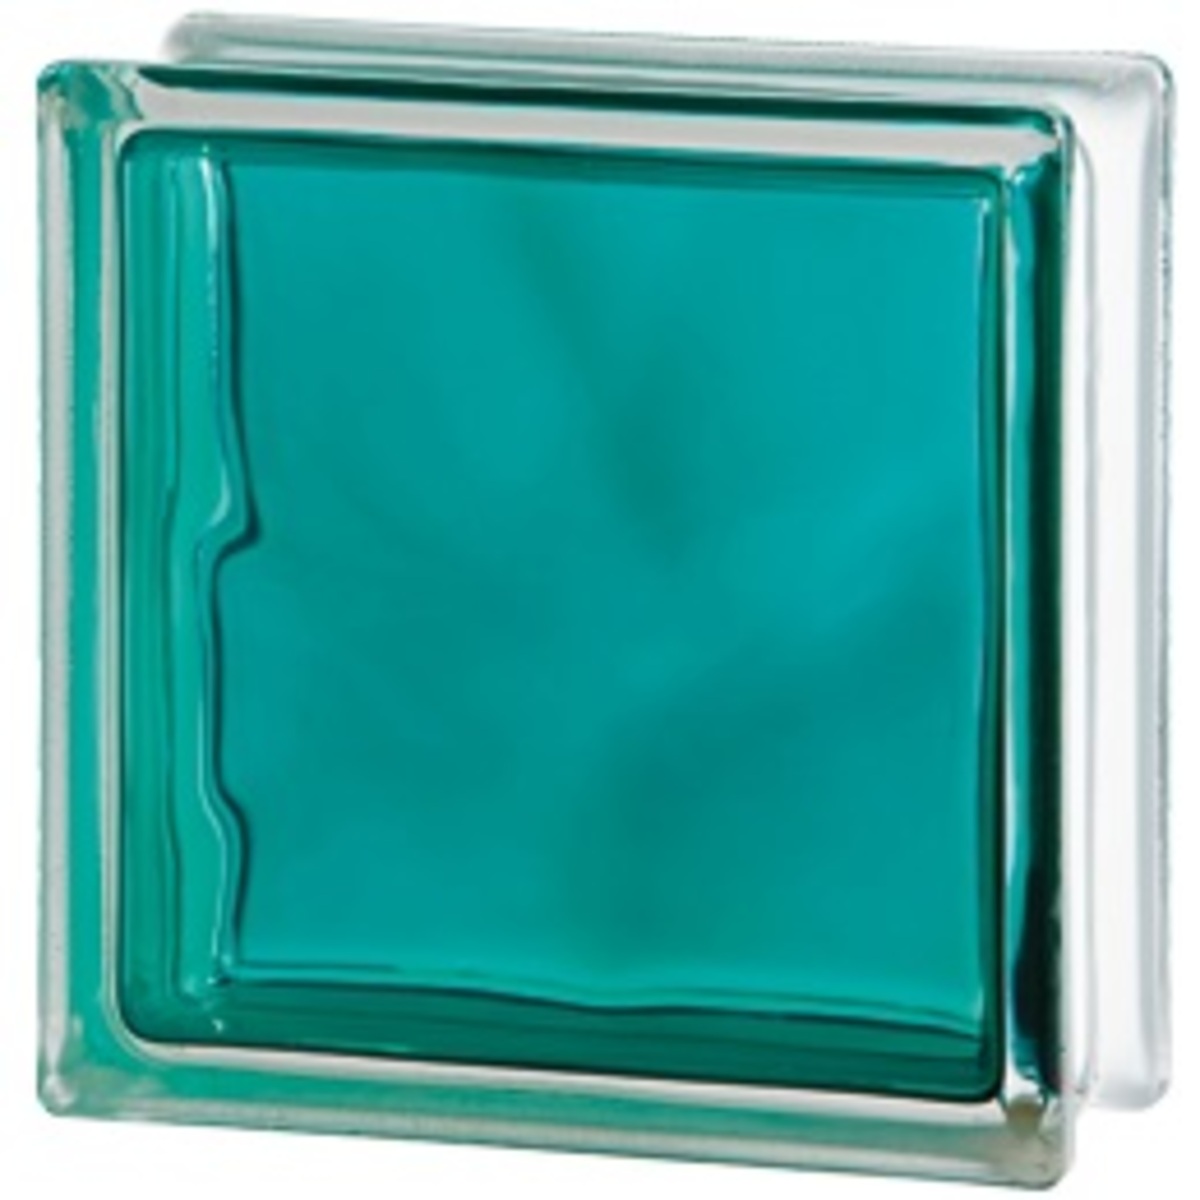 Luxfera Glassblocks turquoise 19x19x8 cm lesk 1908WBT Glassblocks